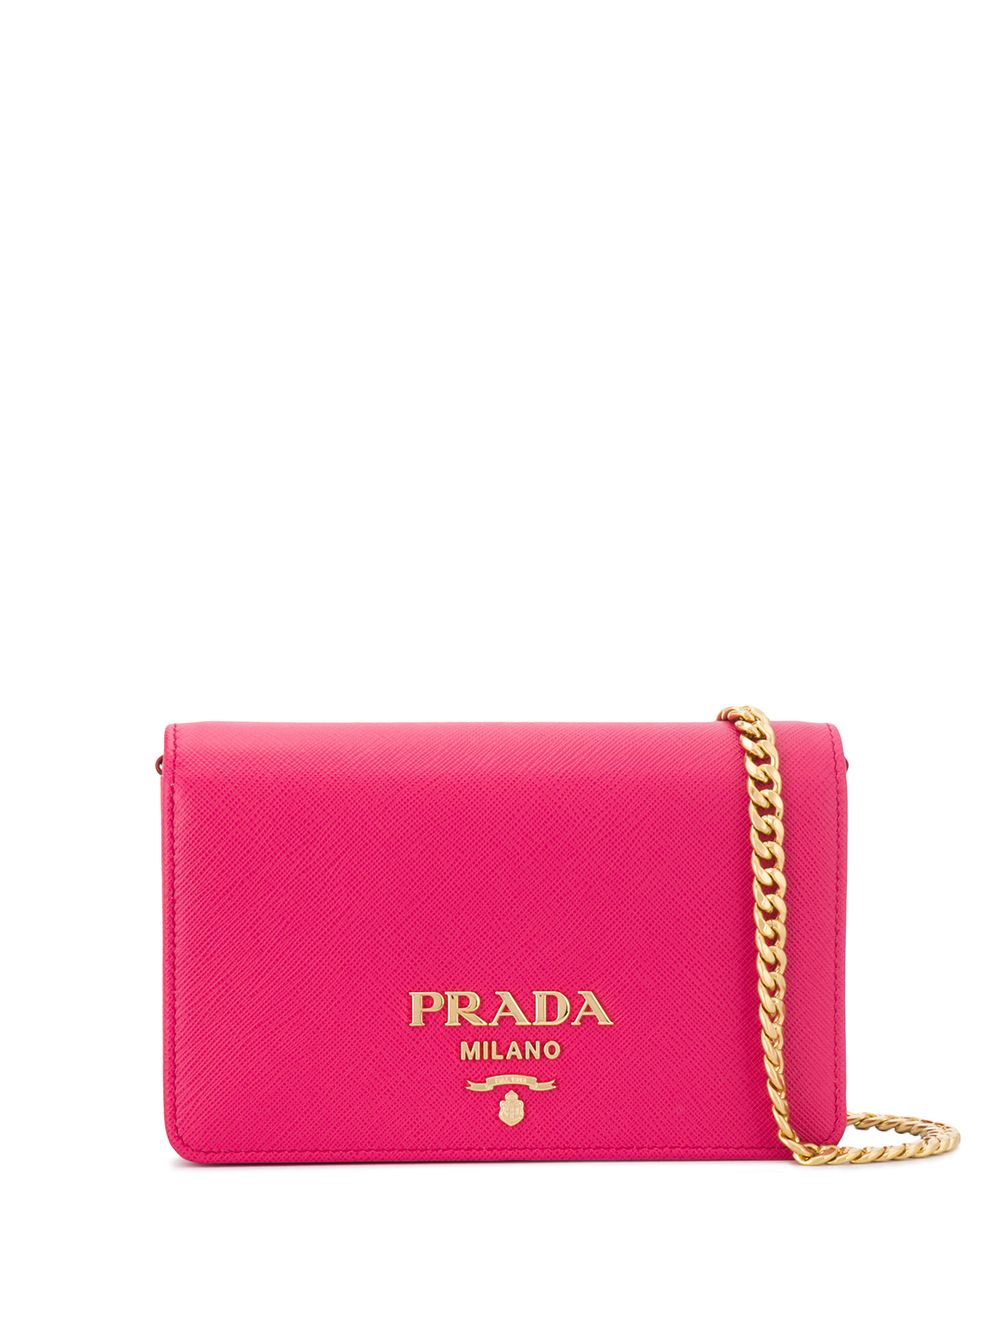 фото Prada мини-сумка на плечо